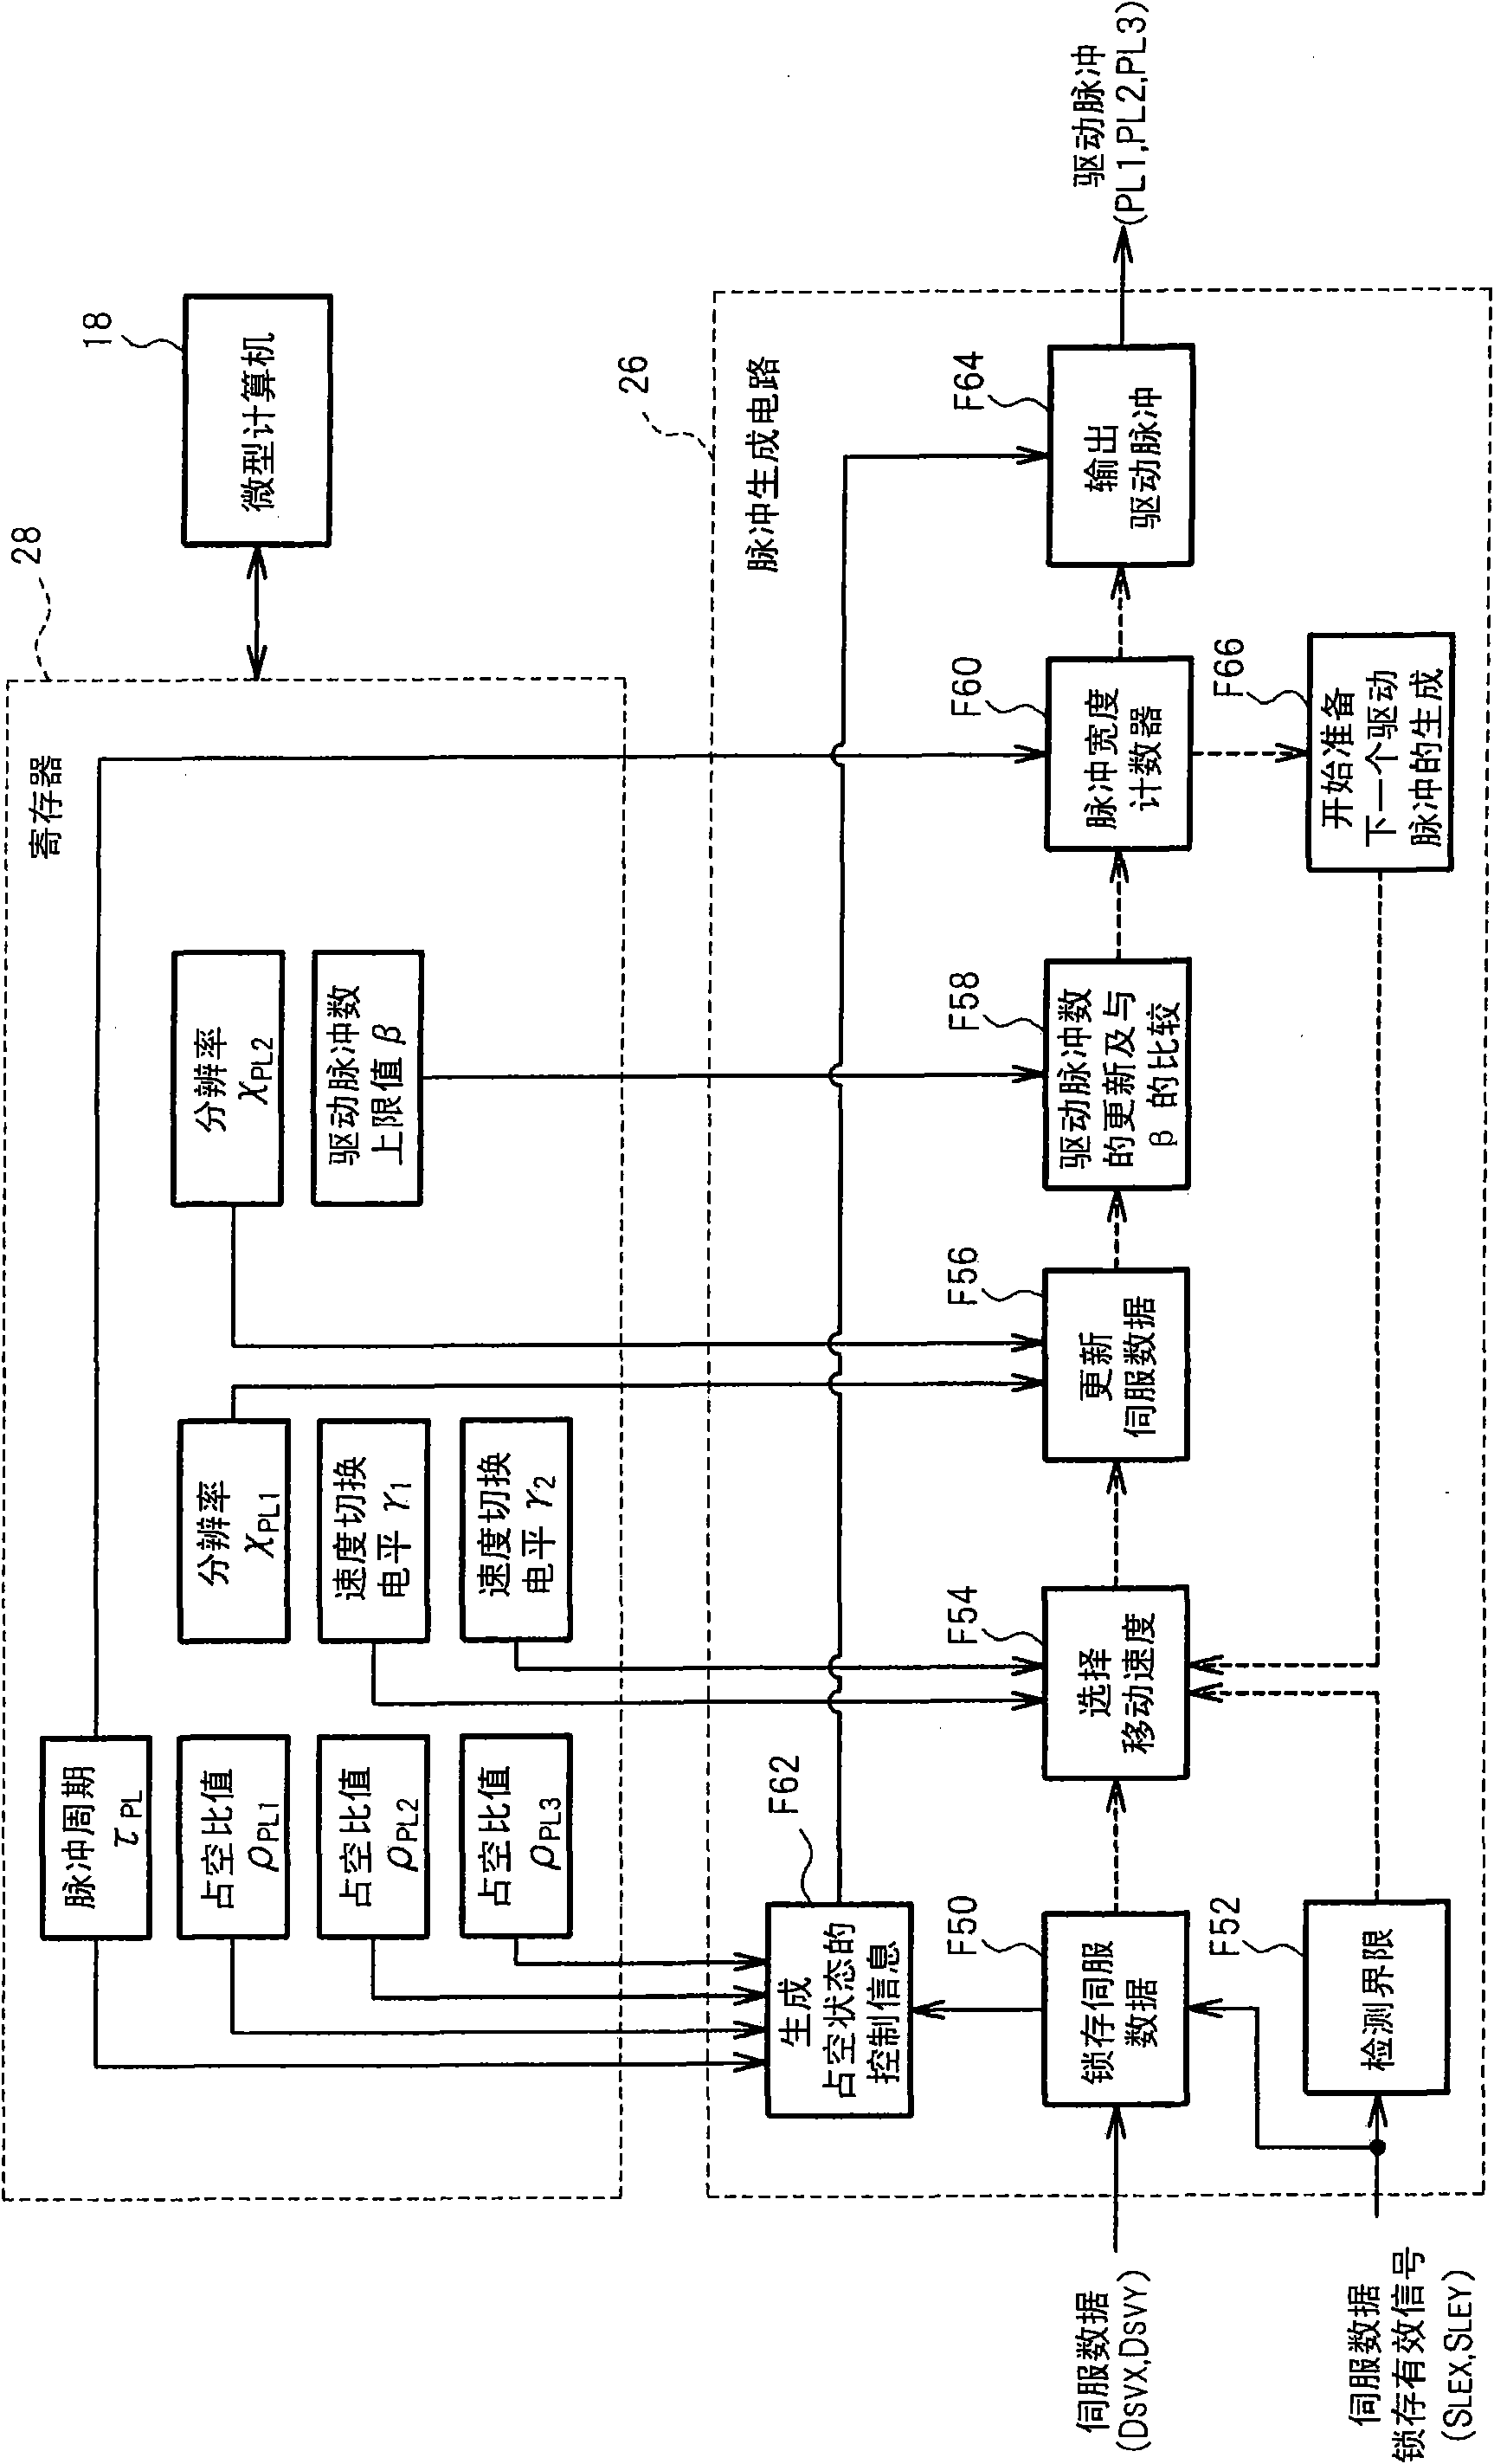 Method for driving piezoelectric actuator, piezoelectric-actuator control circuit, and image-stabilization control circuit